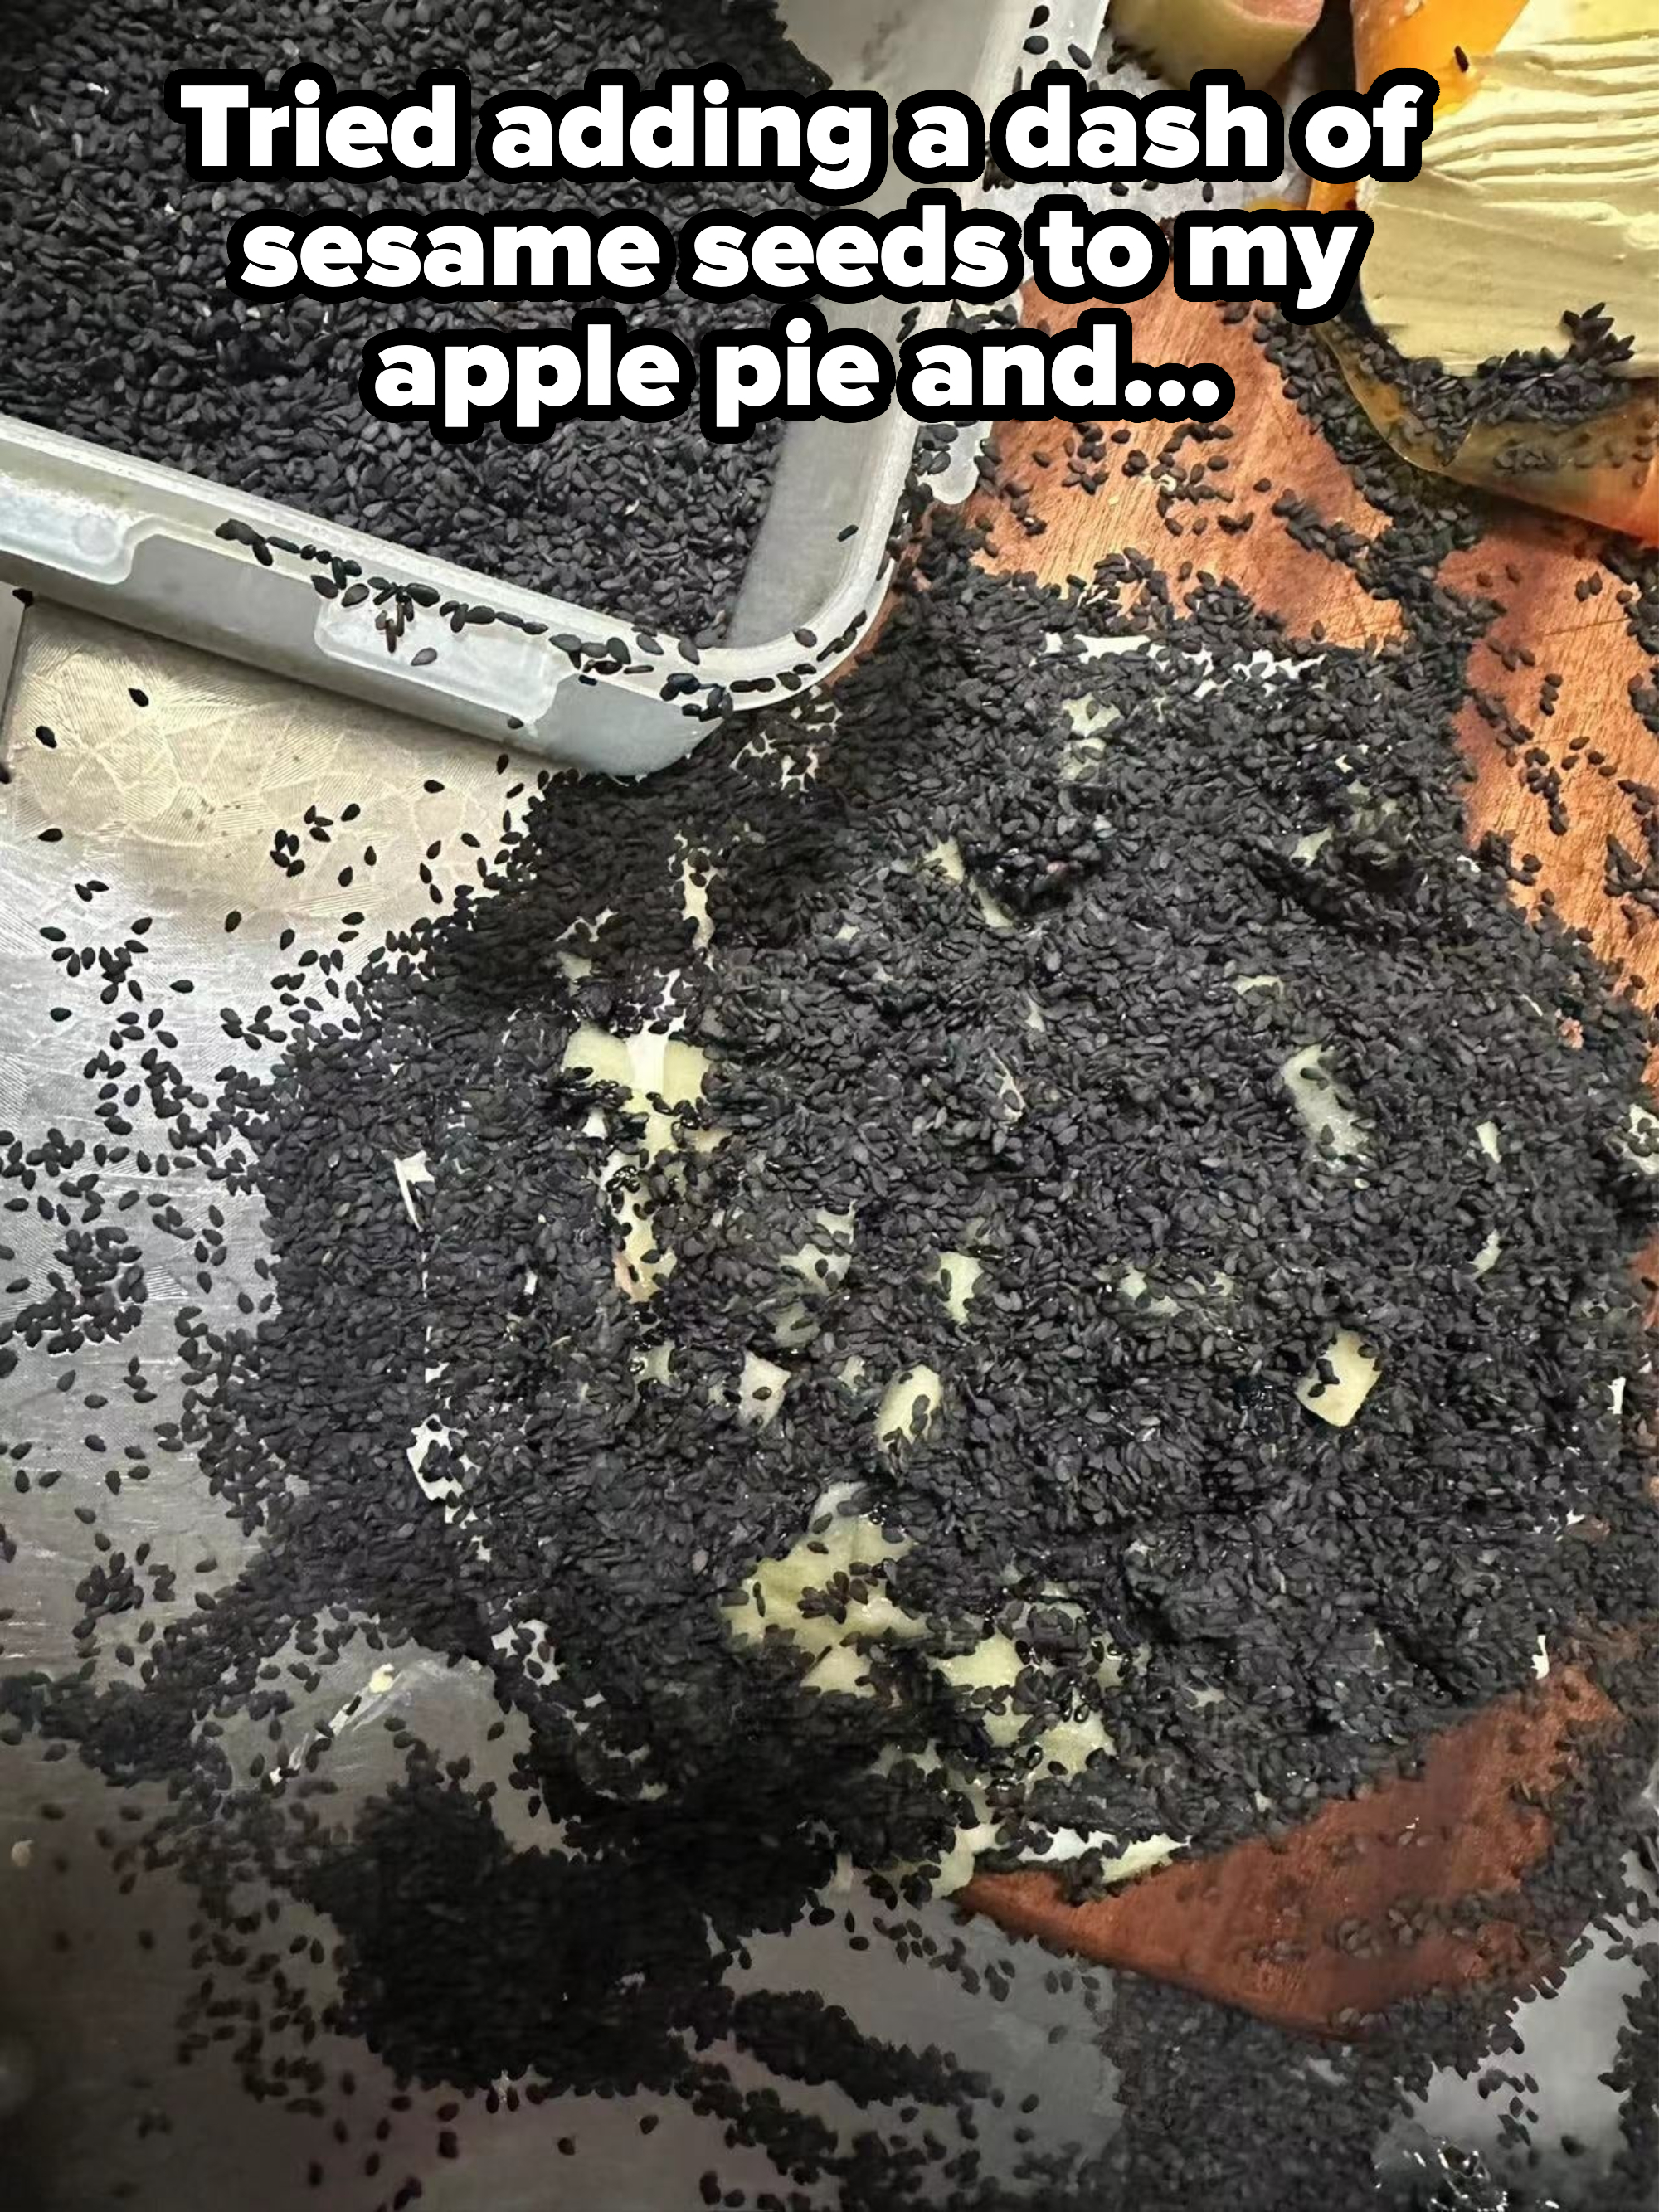 Sesame seeds spilled all over a pie